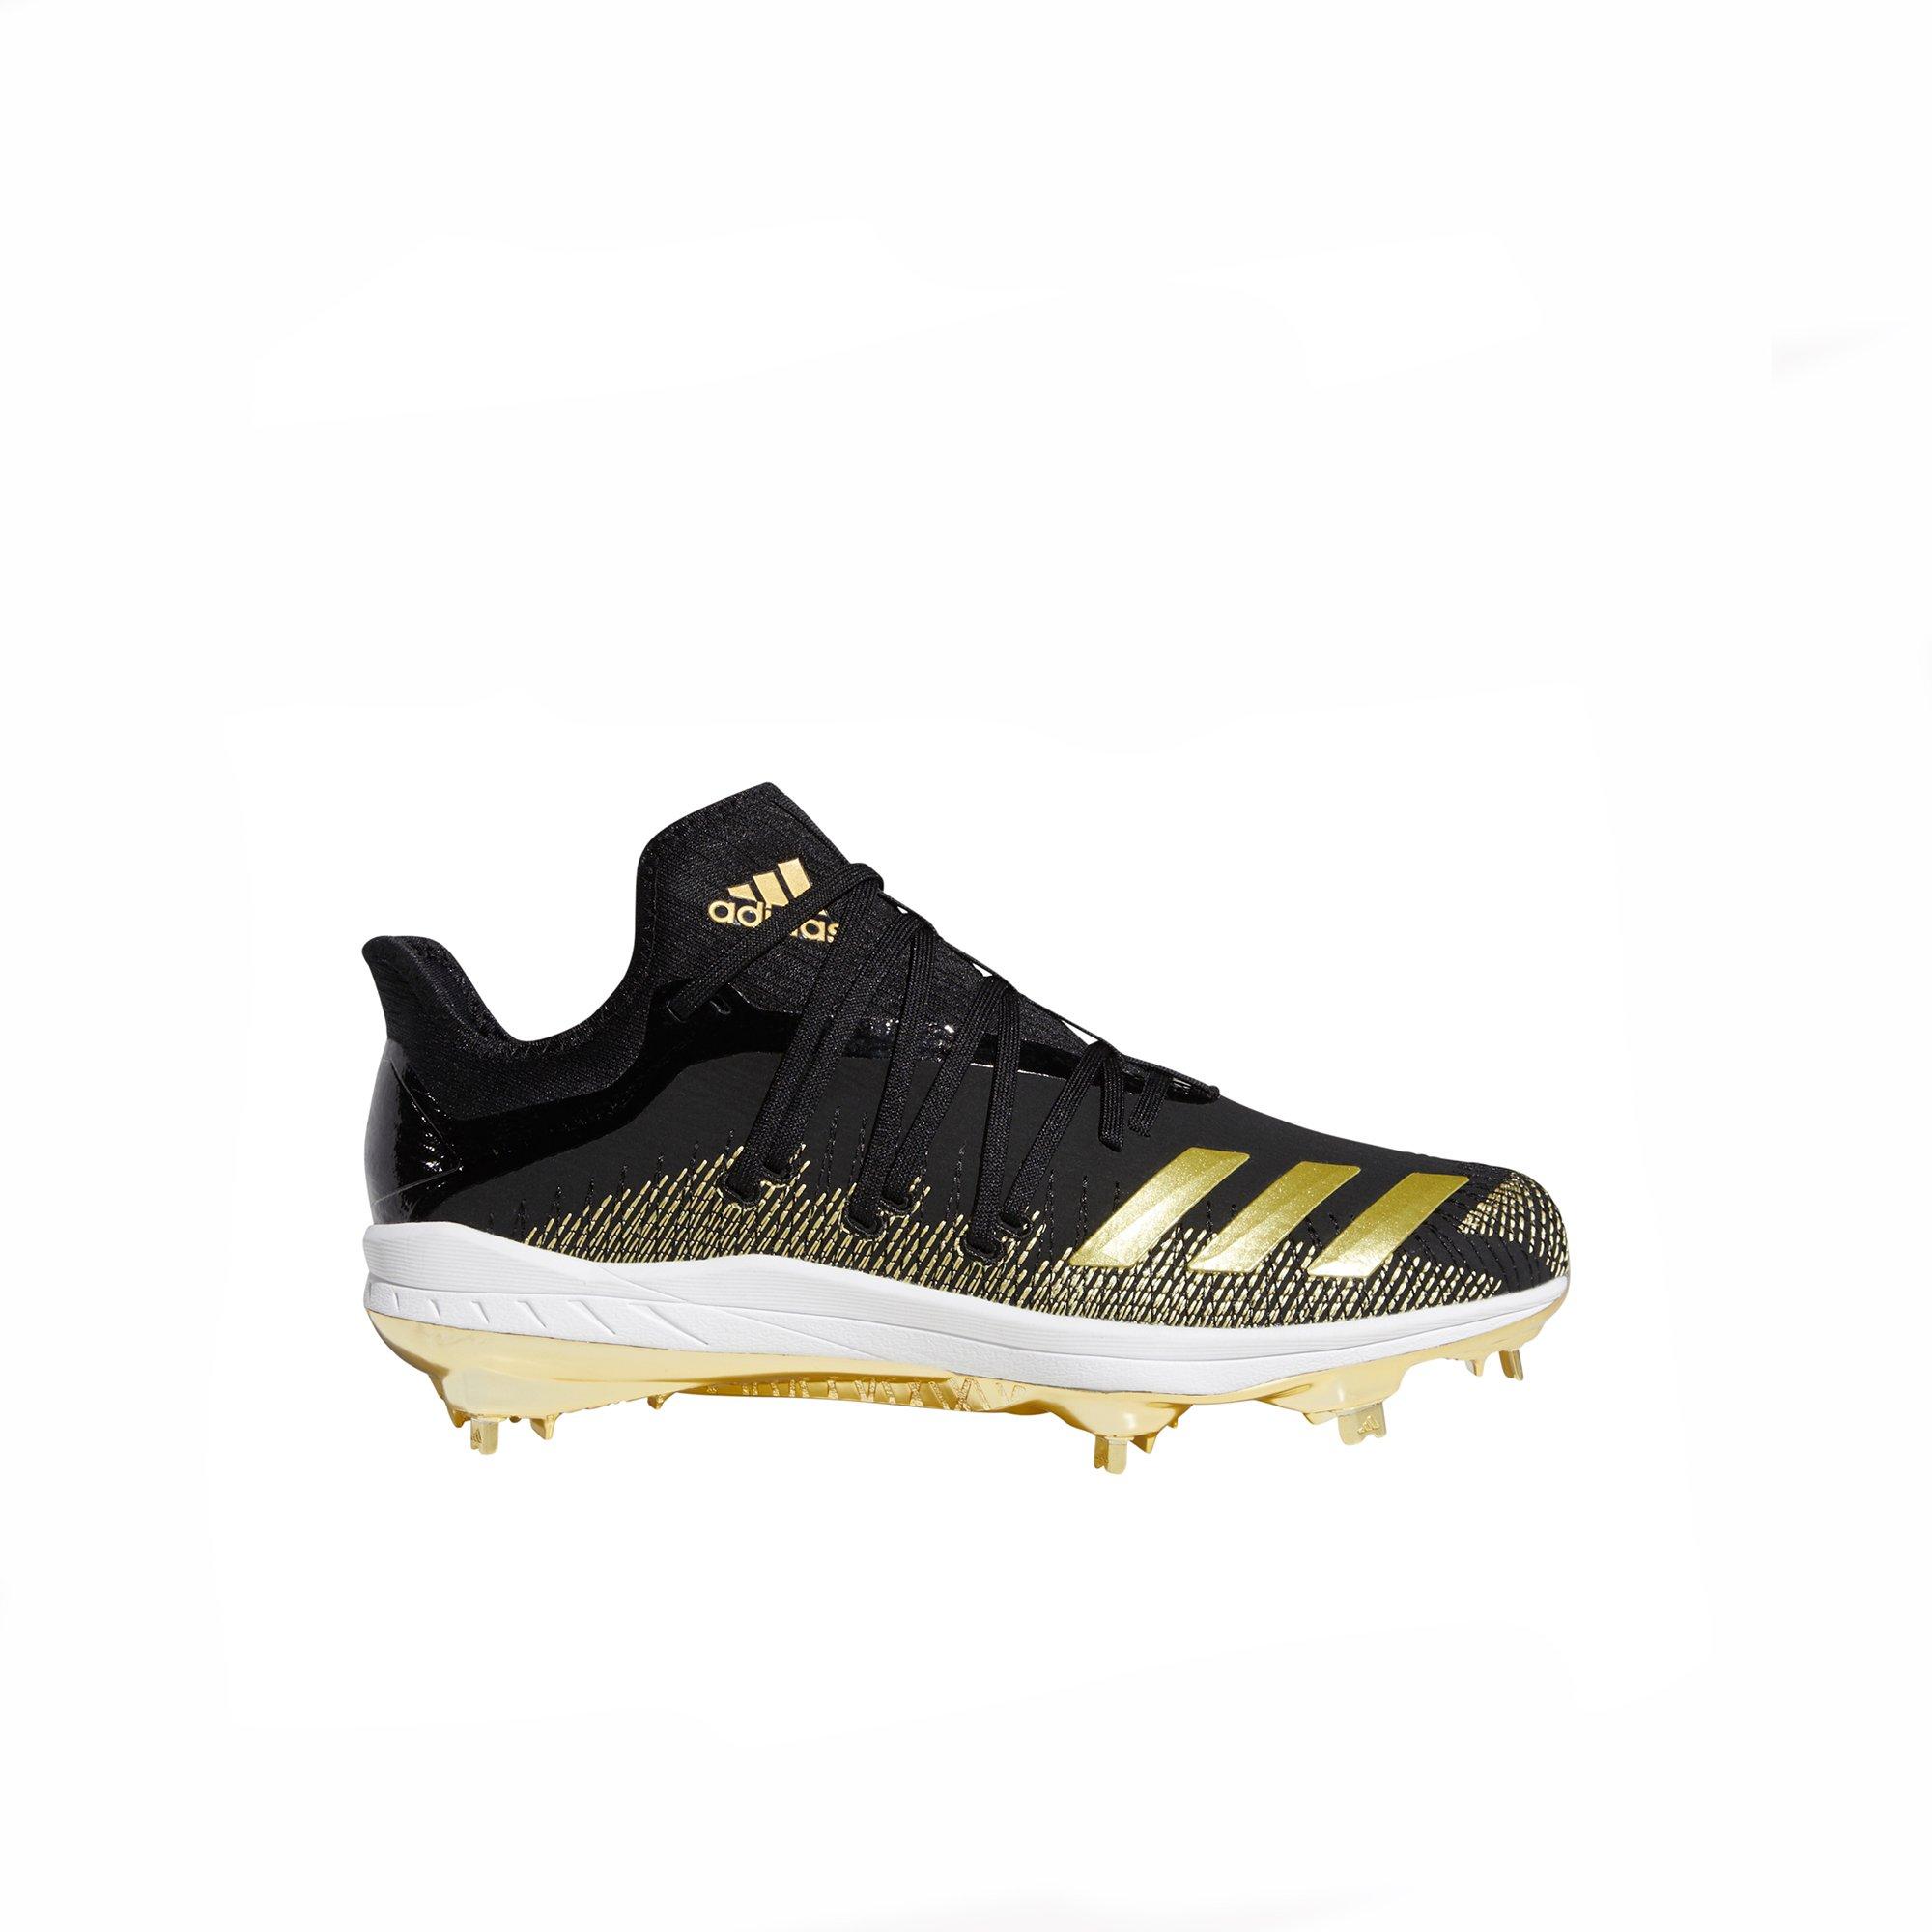 gold adidas baseball cleats